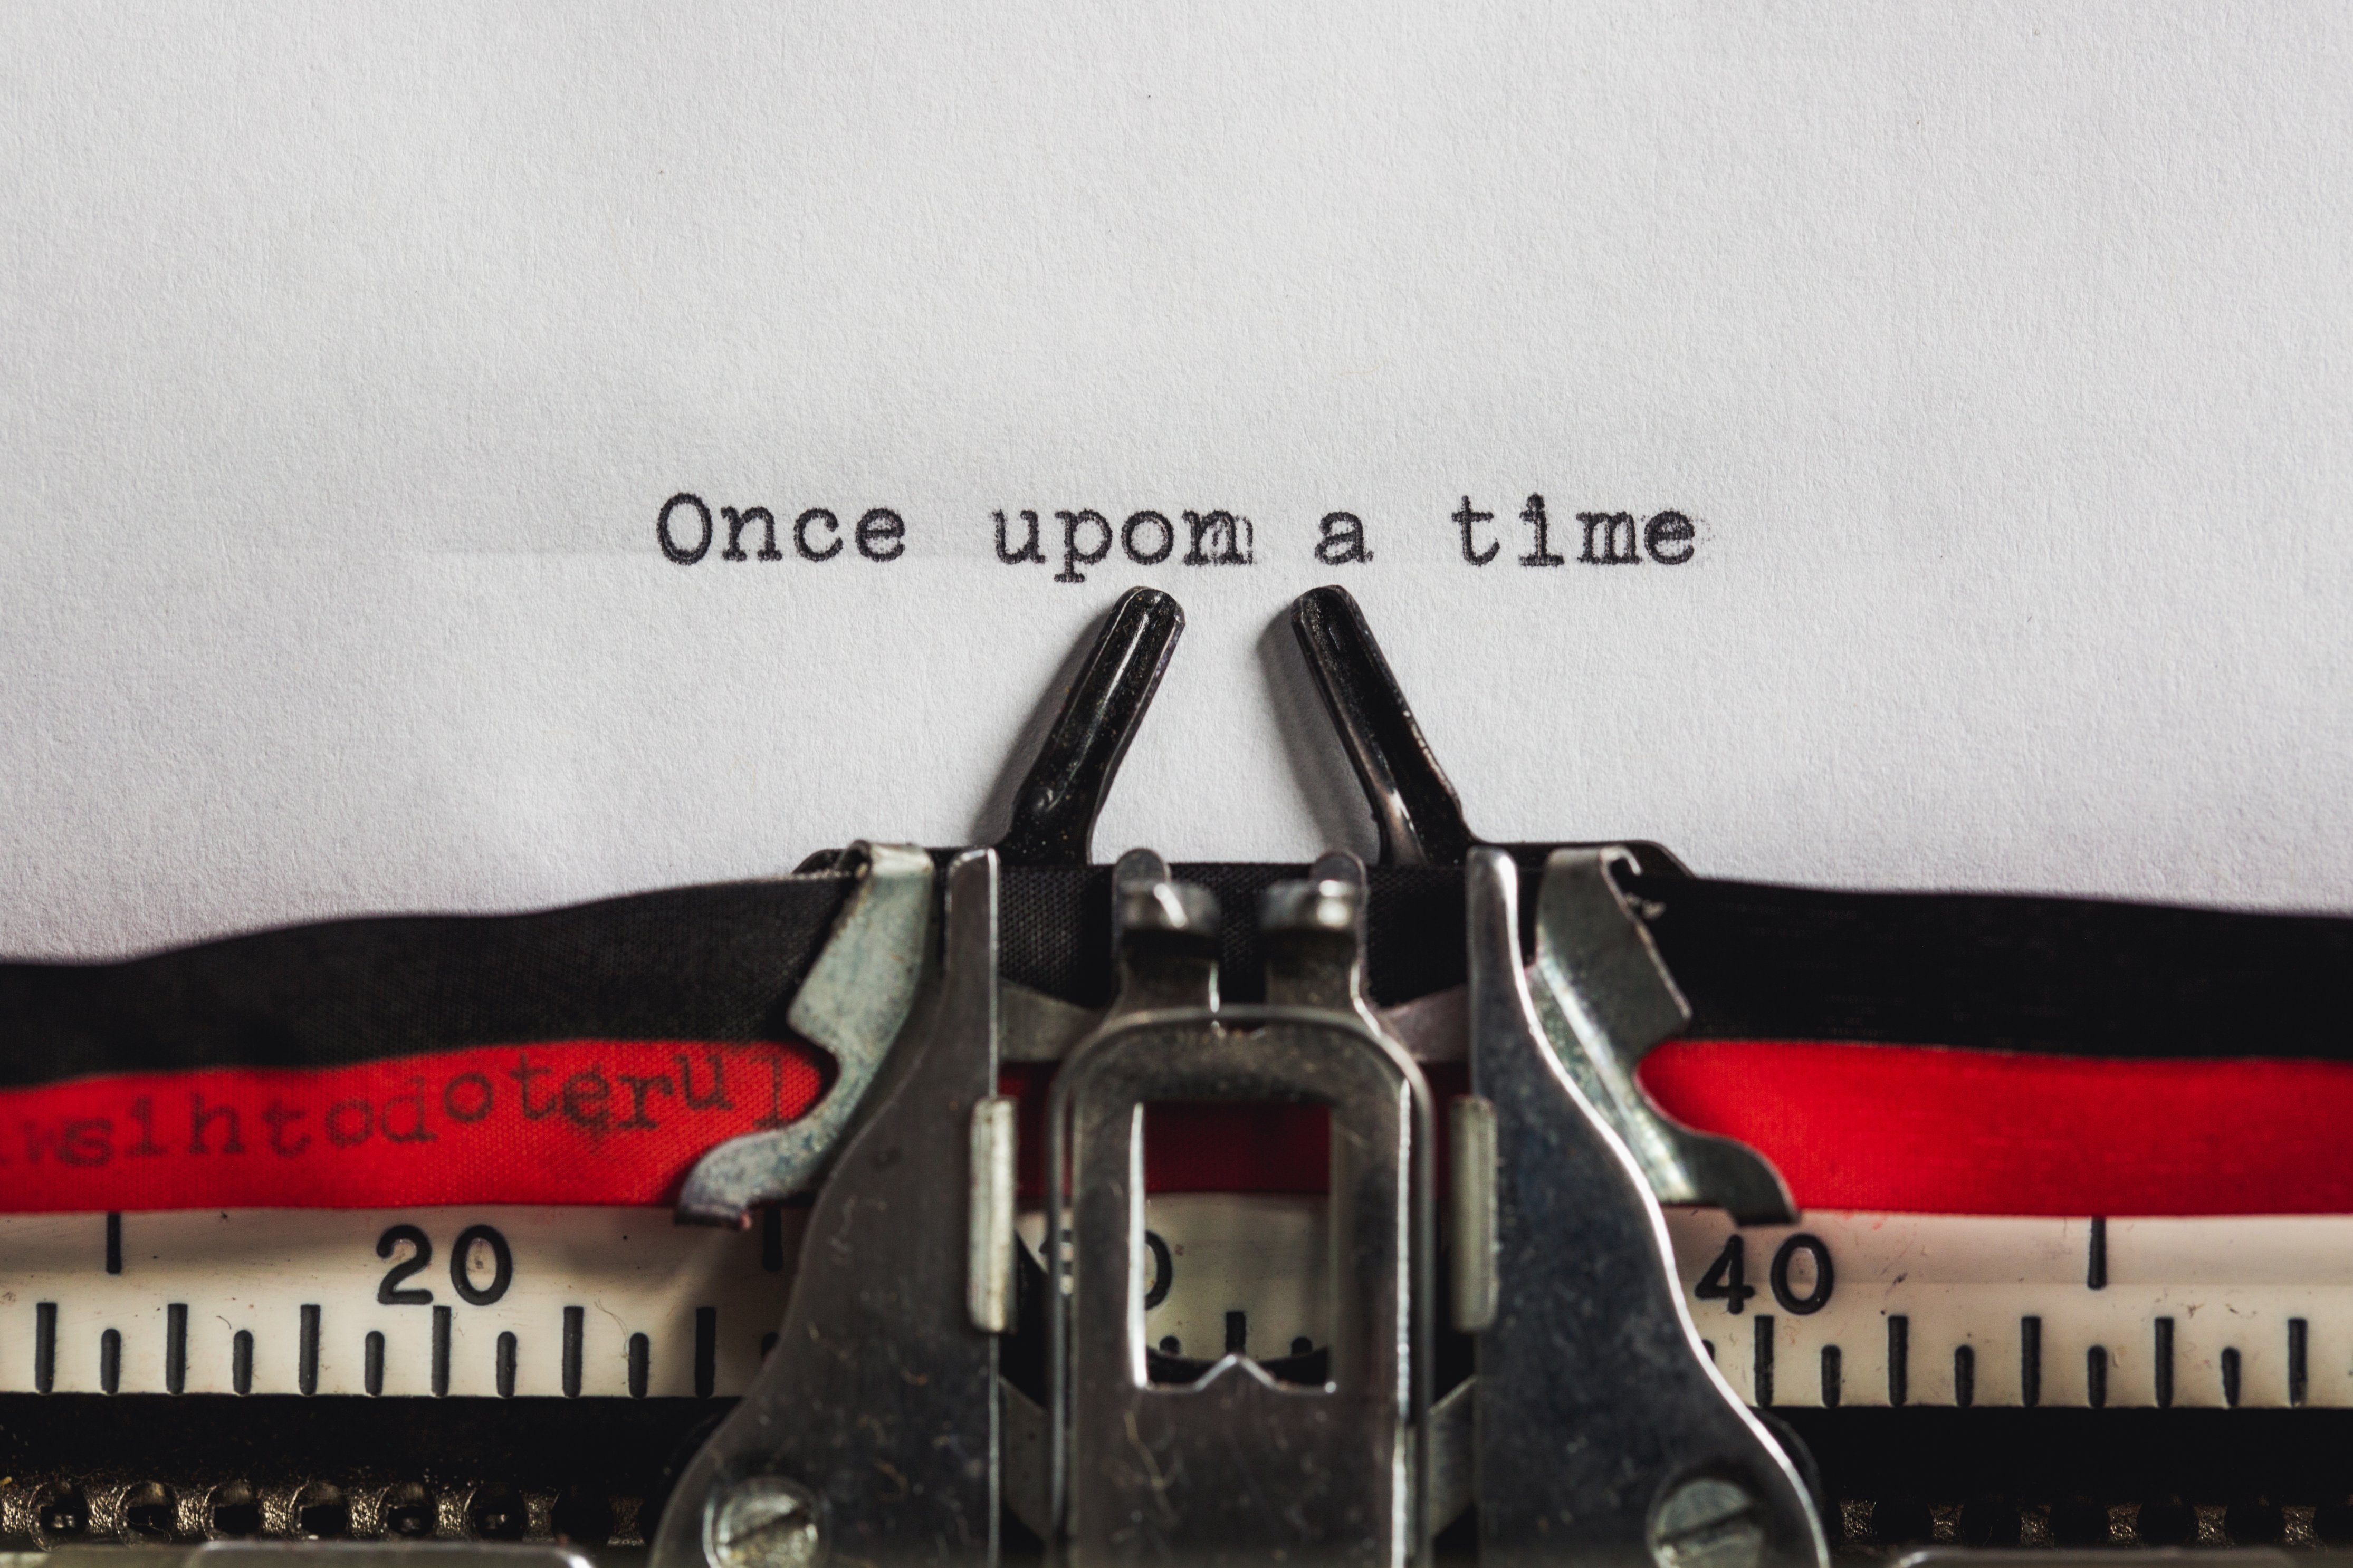 Typerwriter saying, "Once Upon a Time"